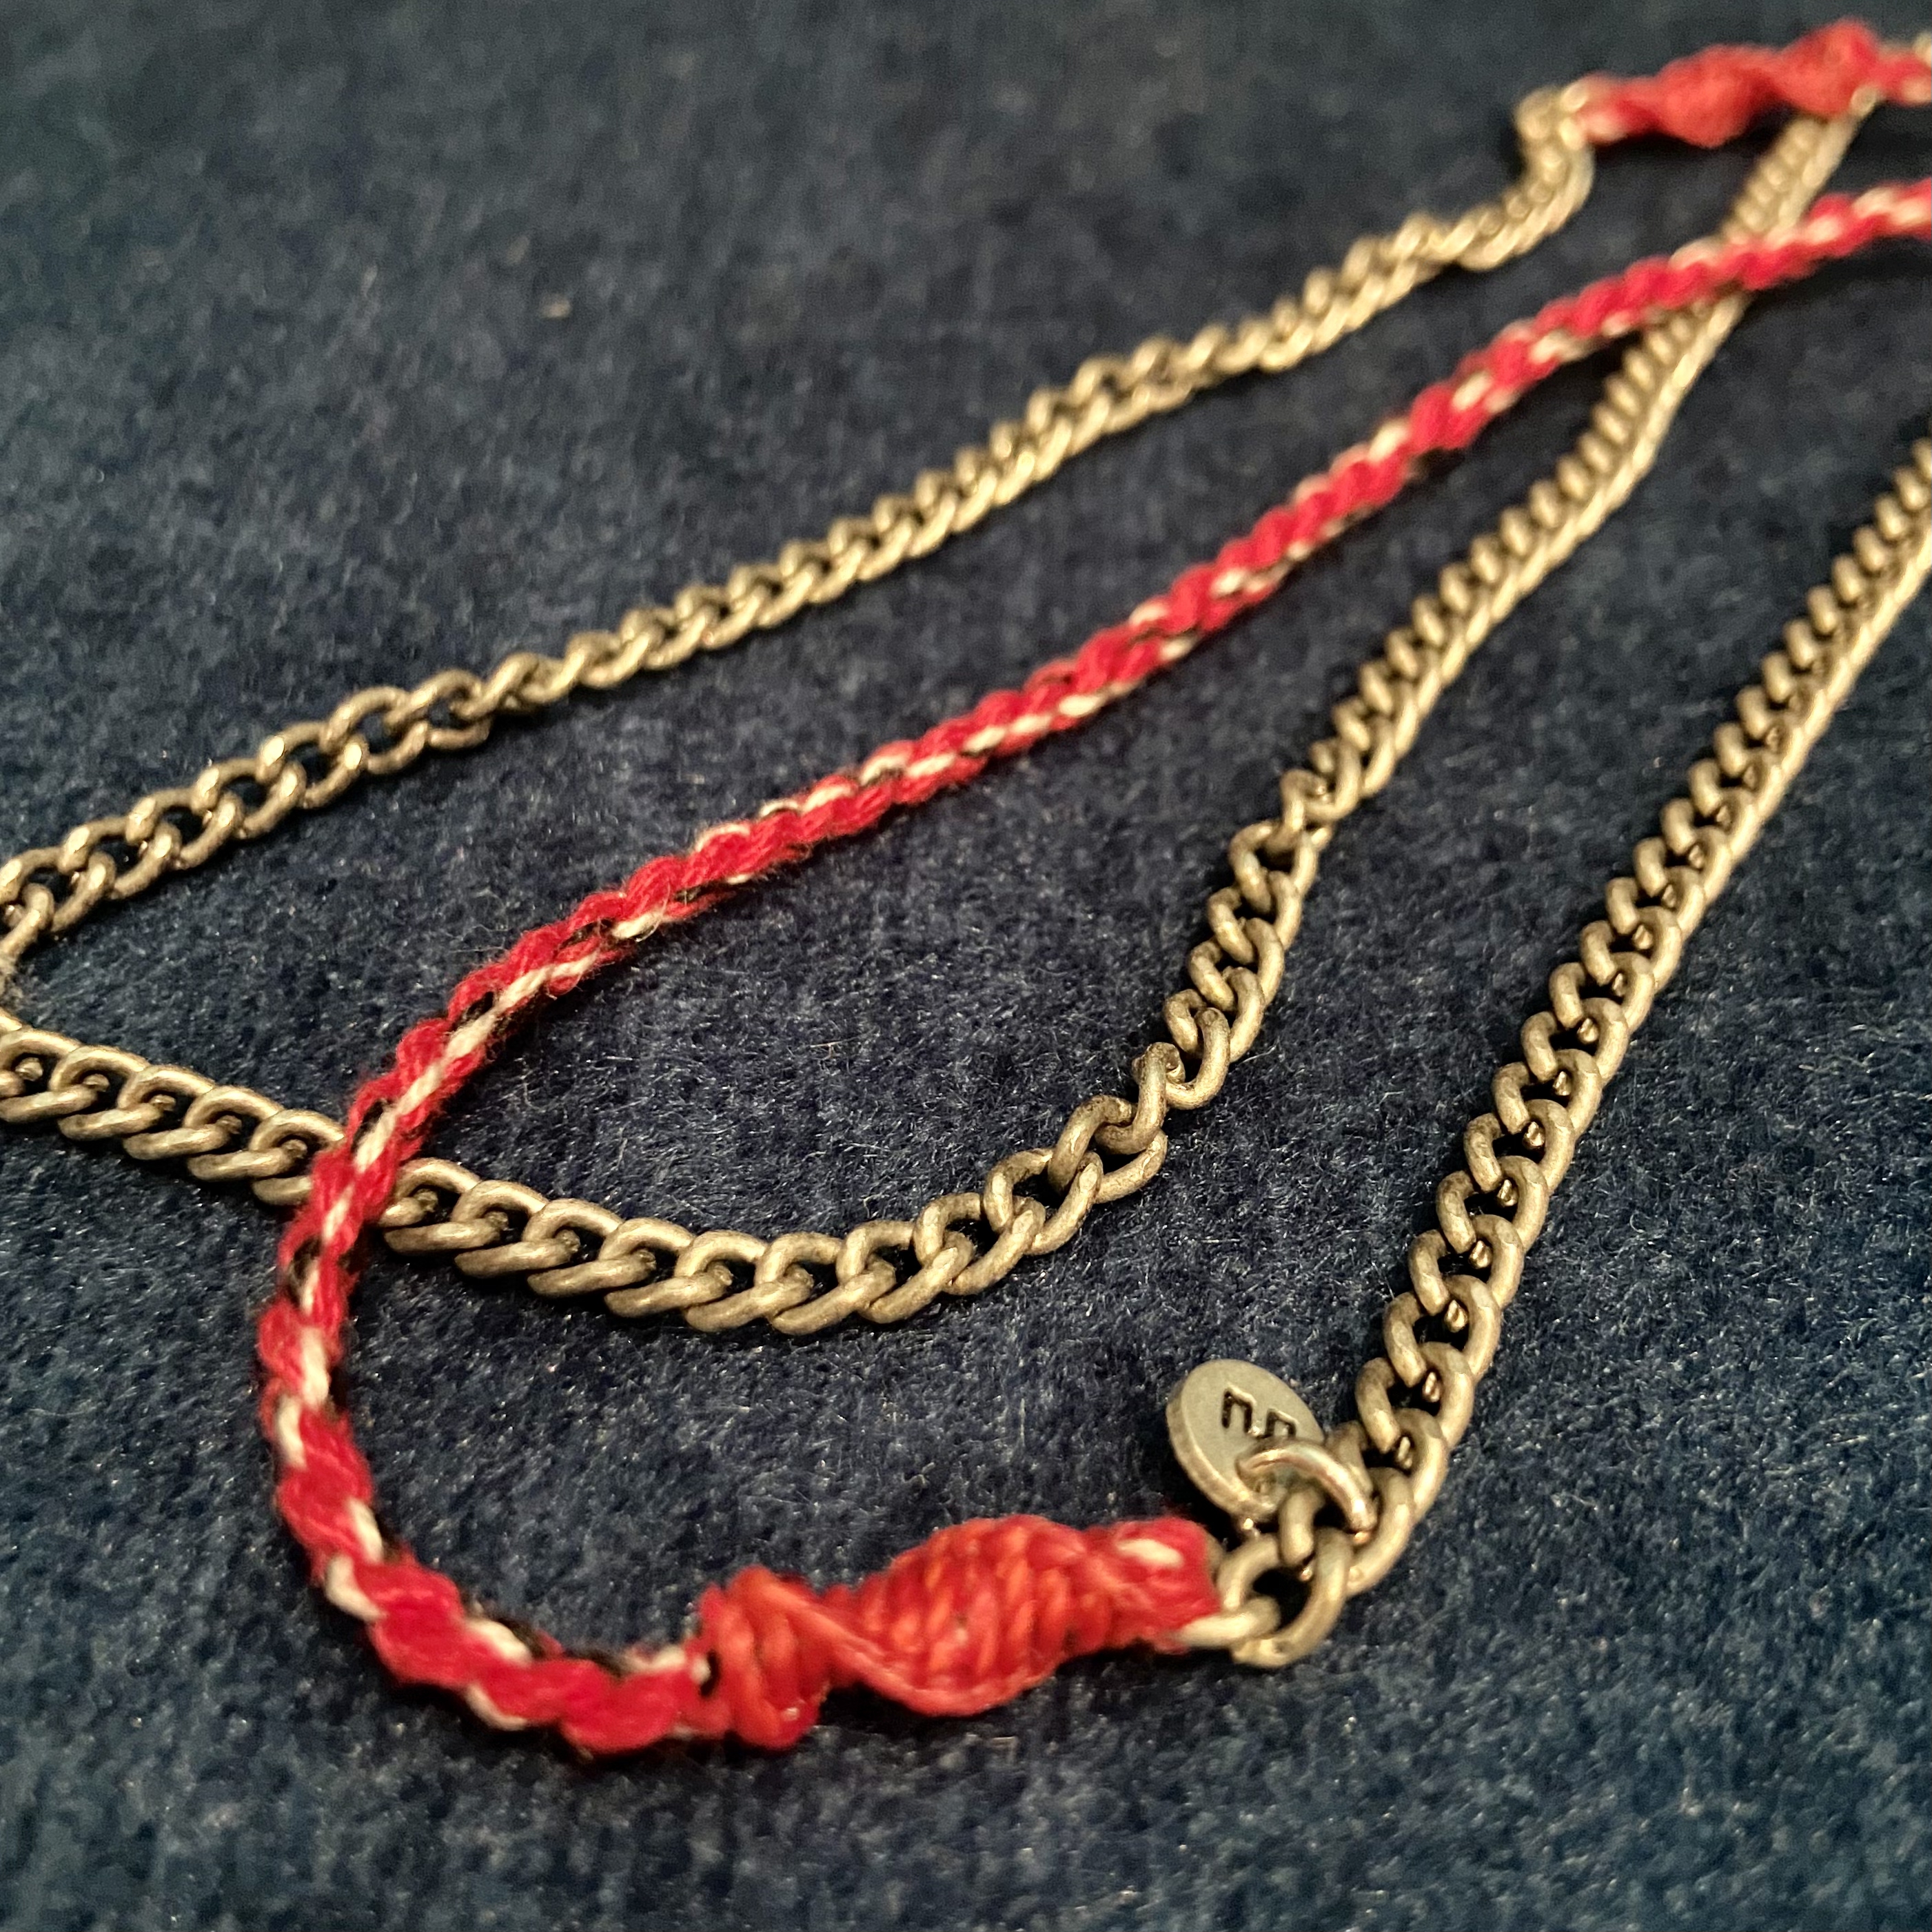 Vintage デザイントップ ロープ チェーン ネックレス ゴールドカラーネックレス